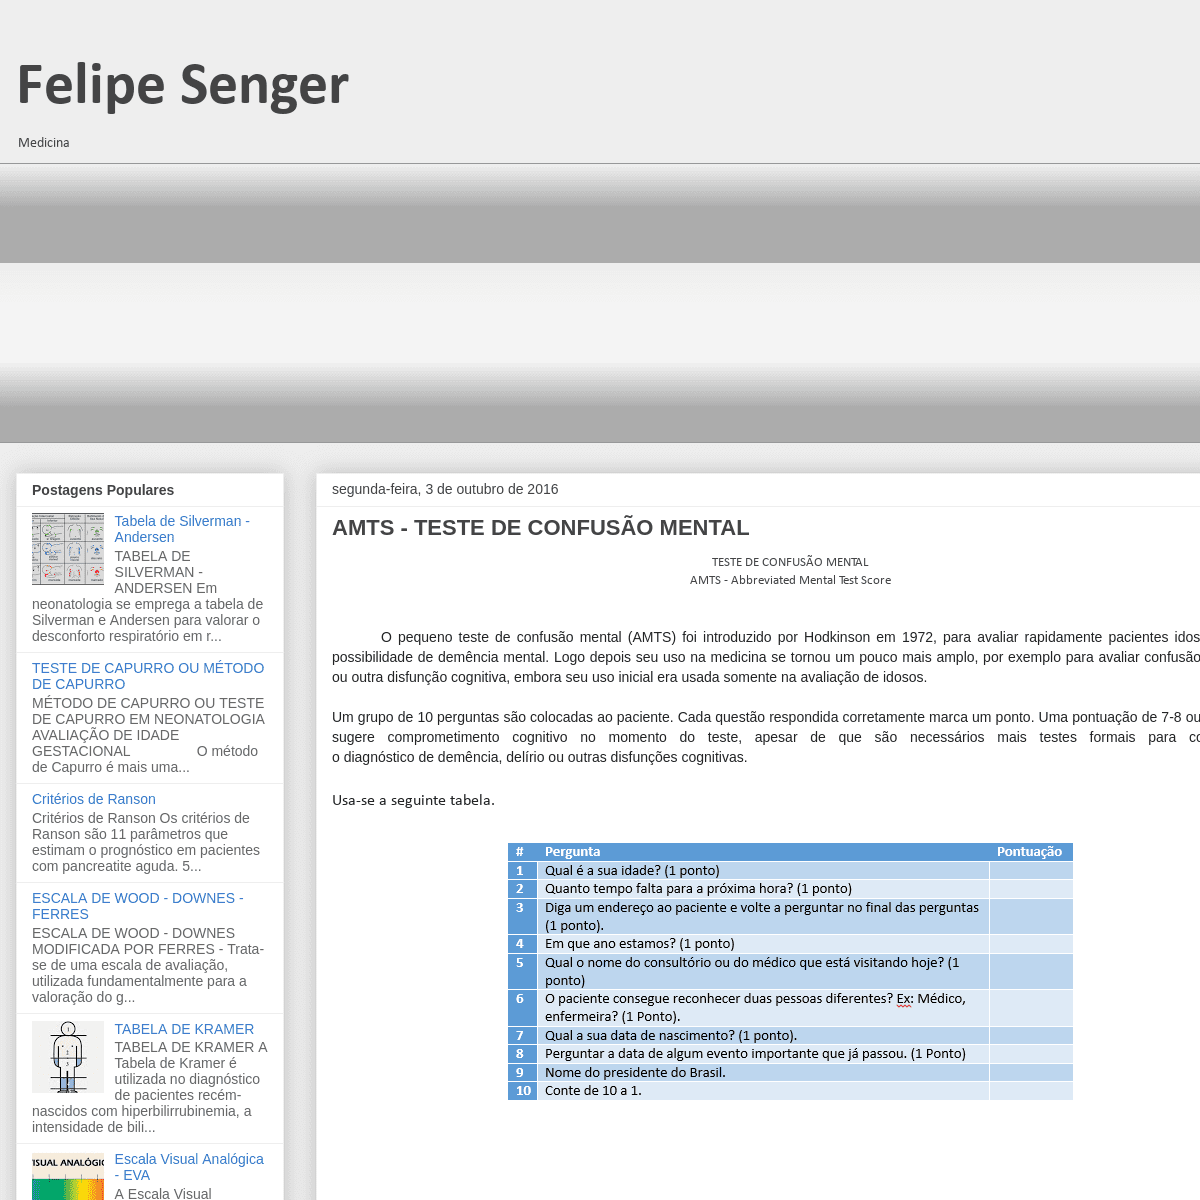 A complete backup of felipesenger.blogspot.com